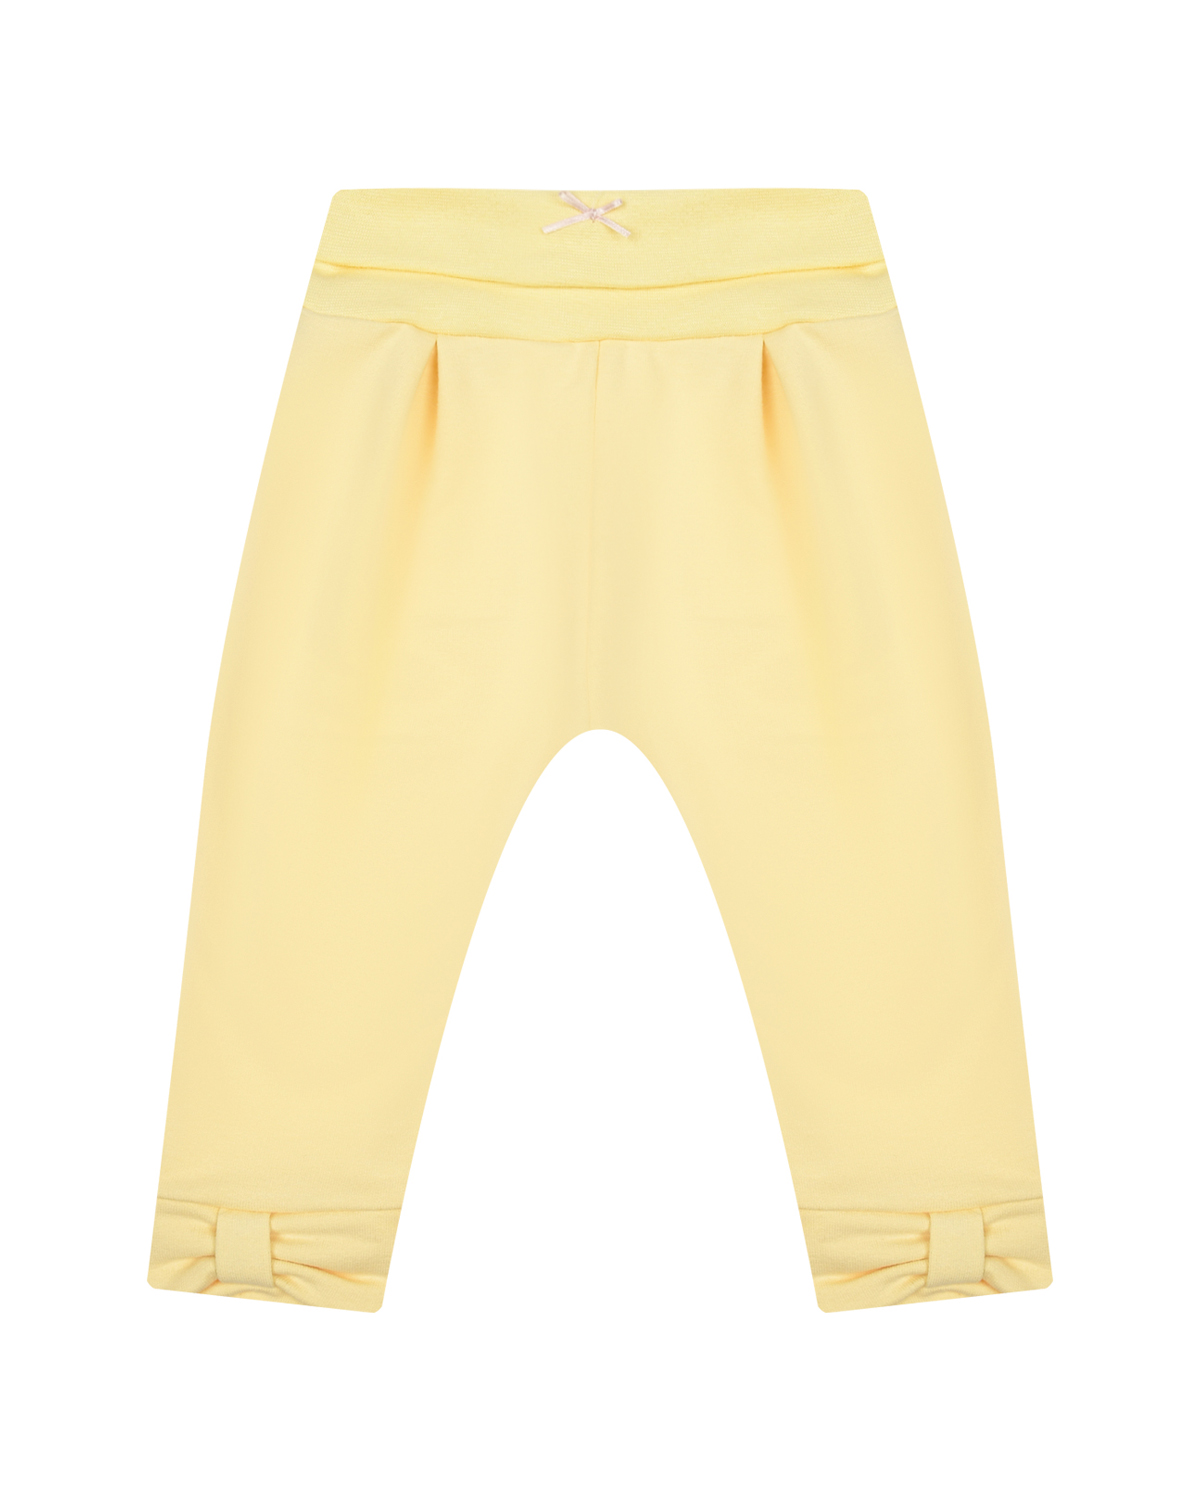 Желтые спортивные брюки с бантами Sanetta fiftyseven персиковые спортивные брюки с очным принтом sanetta fiftyseven детские